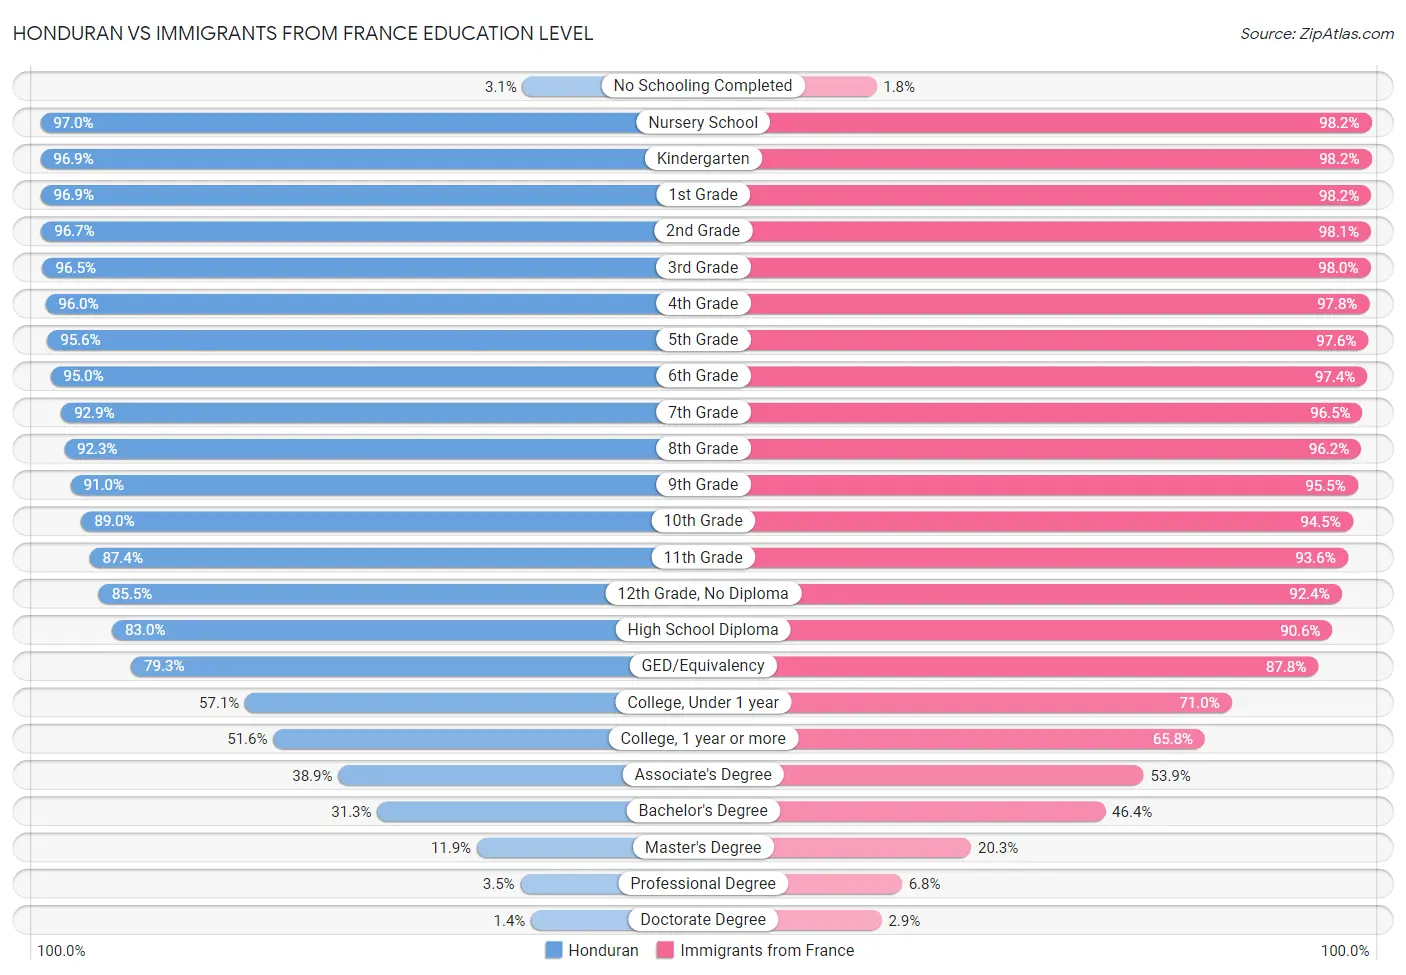 Honduran vs Immigrants from France Education Level